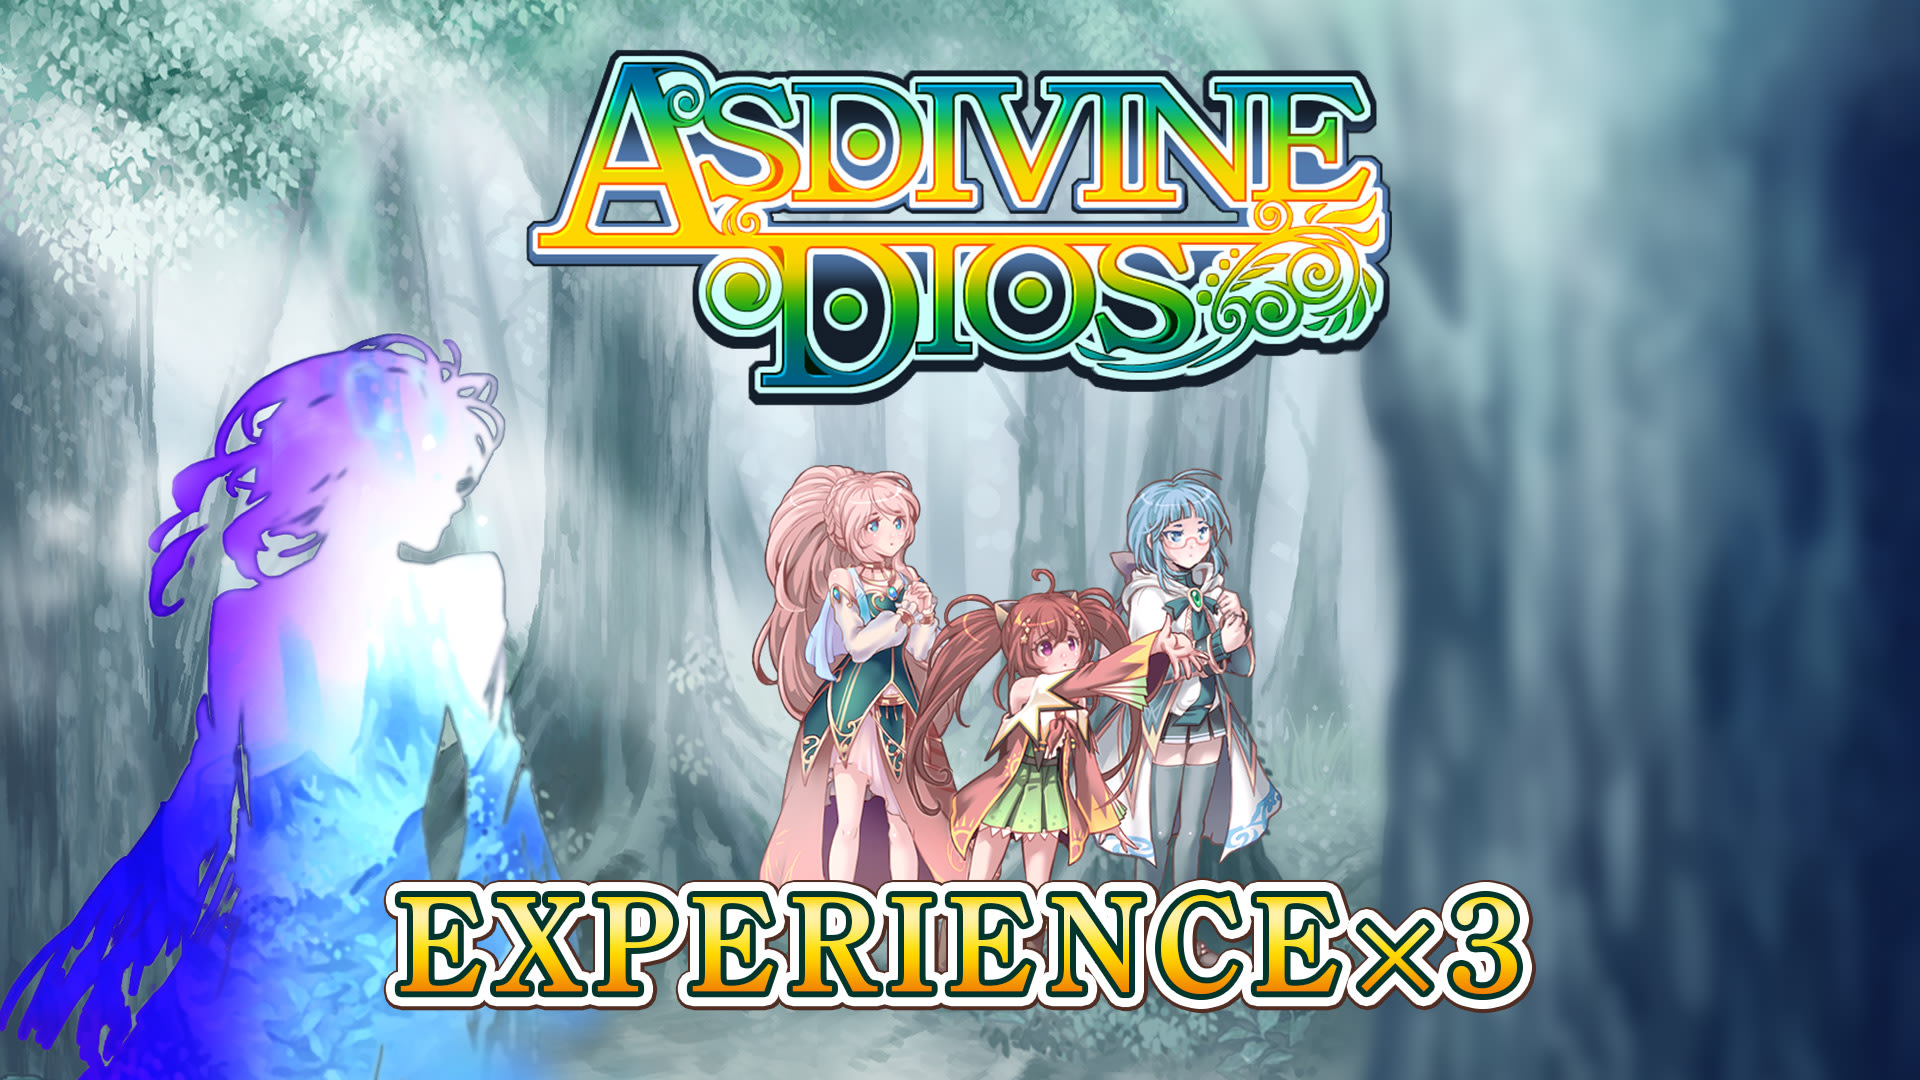 Experience x3 - Asdivine Dios